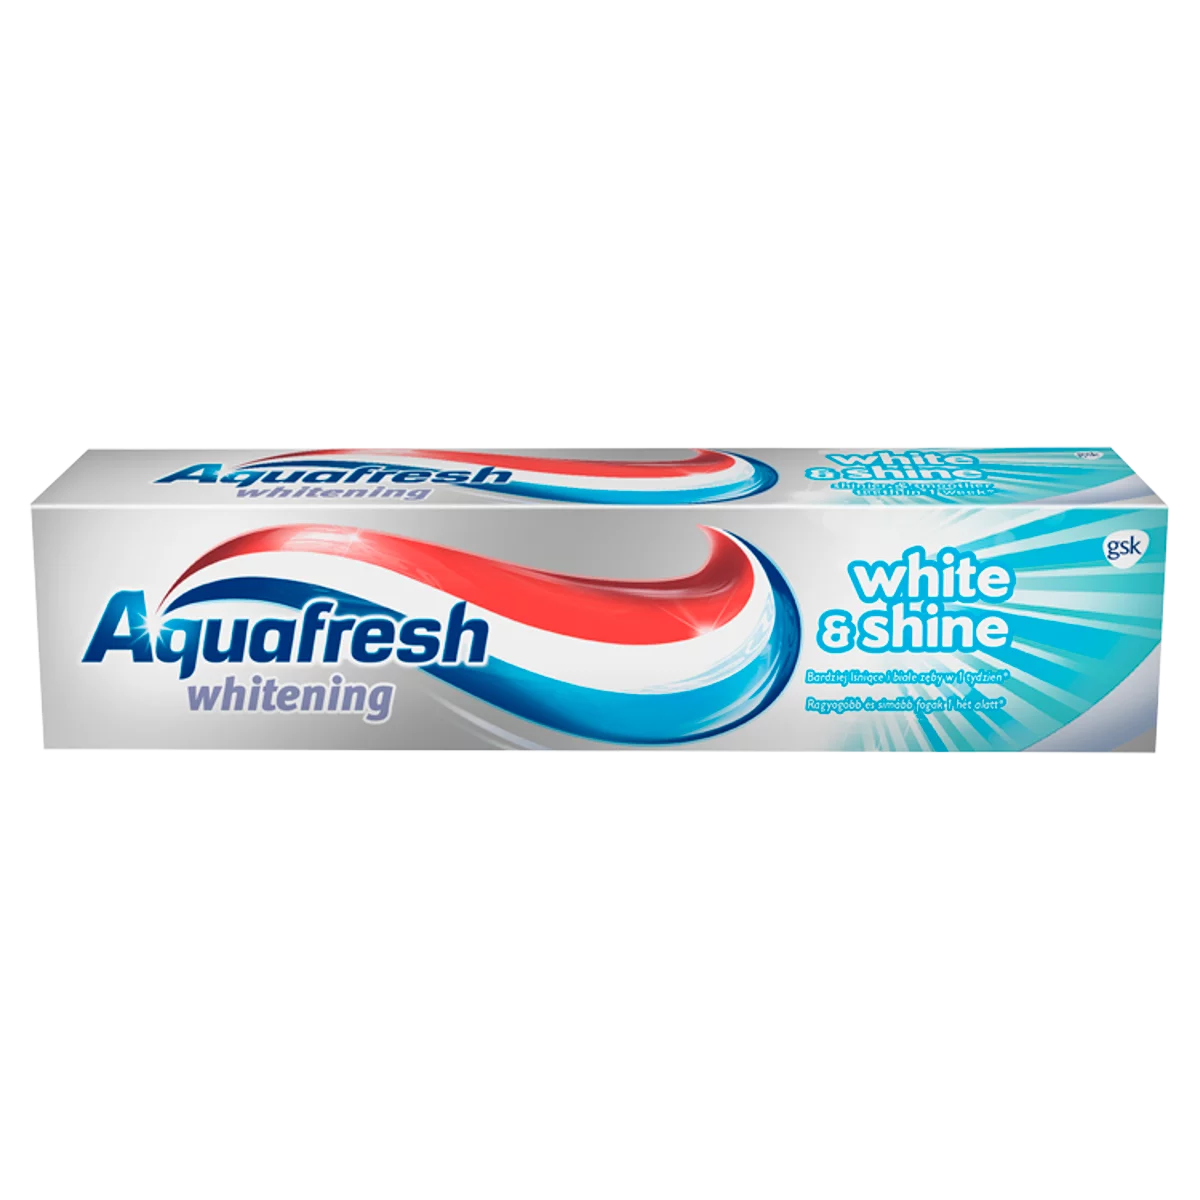 Aquafresh Whitening White & Shine fogkrém 100 ml